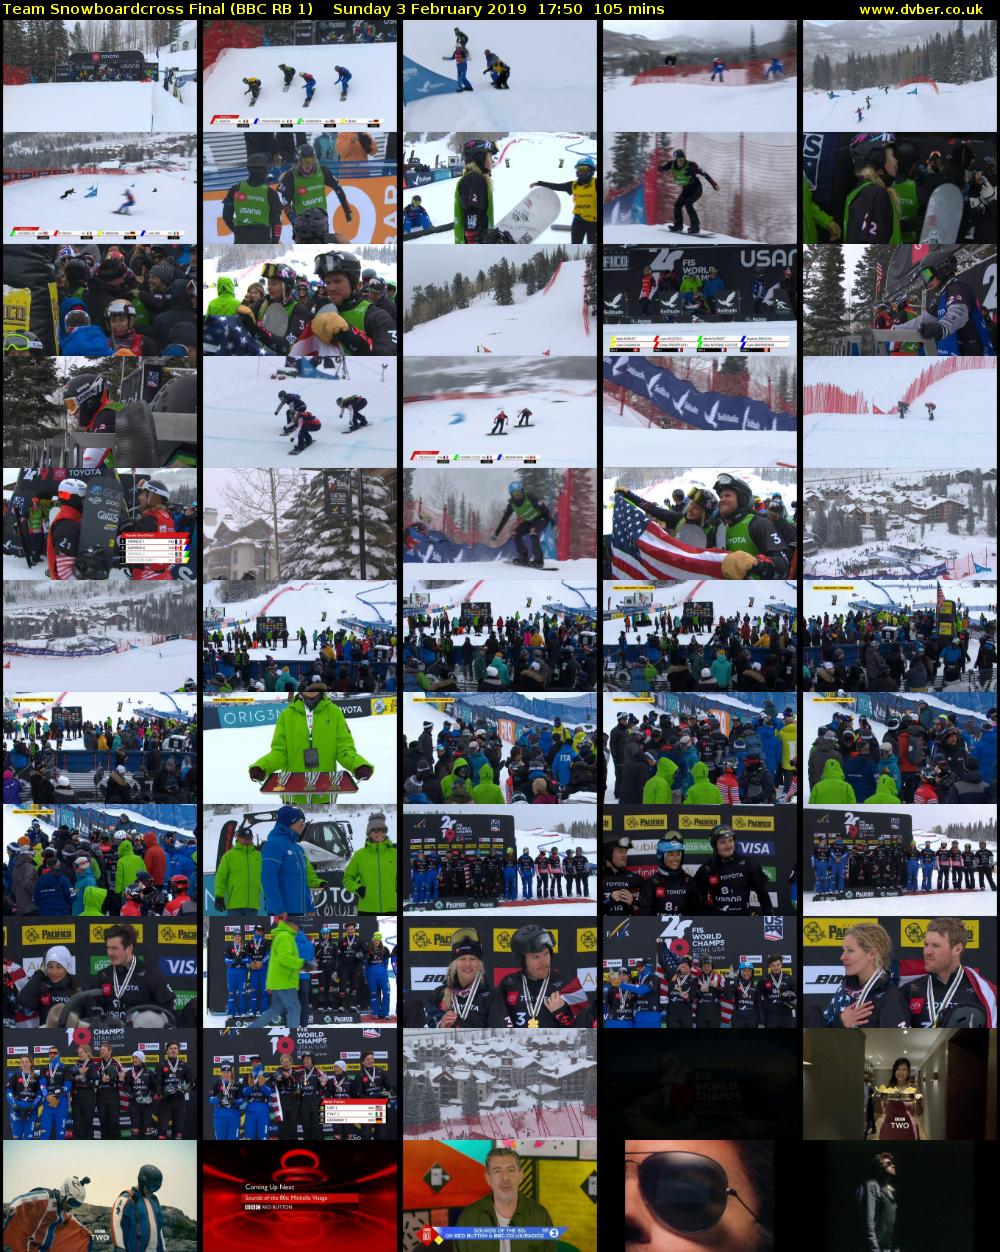 Team Snowboardcross Final (BBC RB 1) Sunday 3 February 2019 17:50 - 19:35